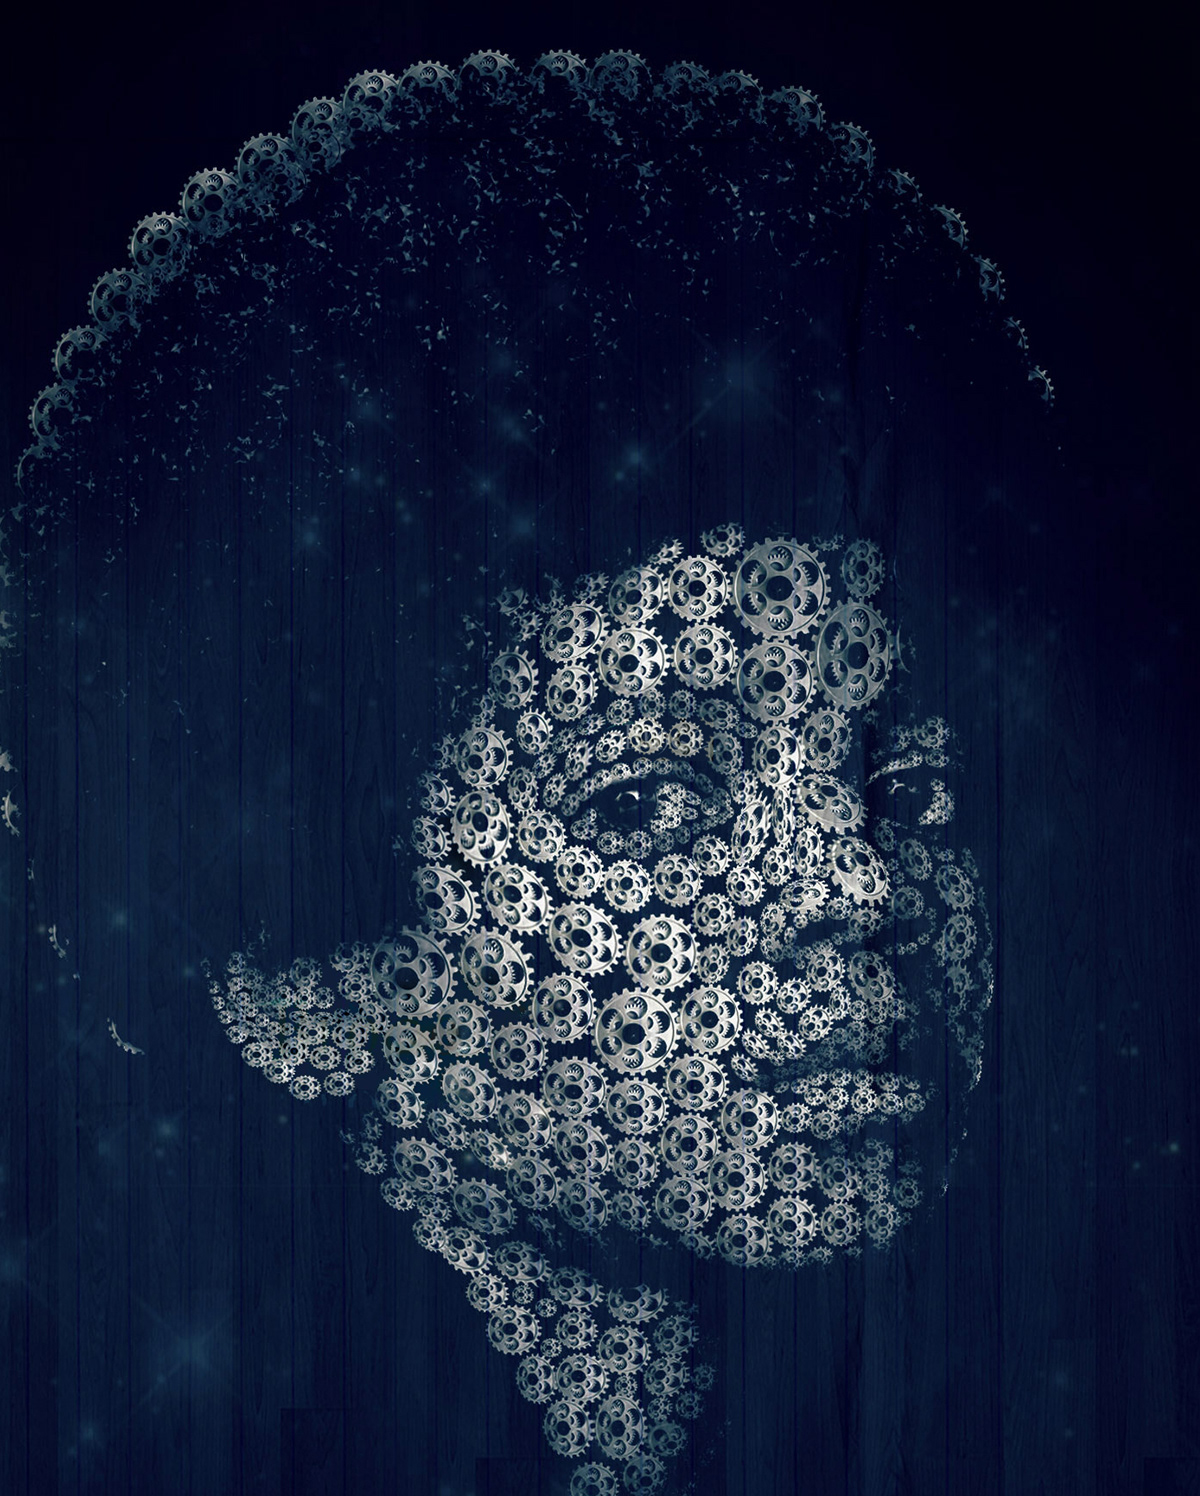 michael jackson wallpapers mj designs King of pop MJ